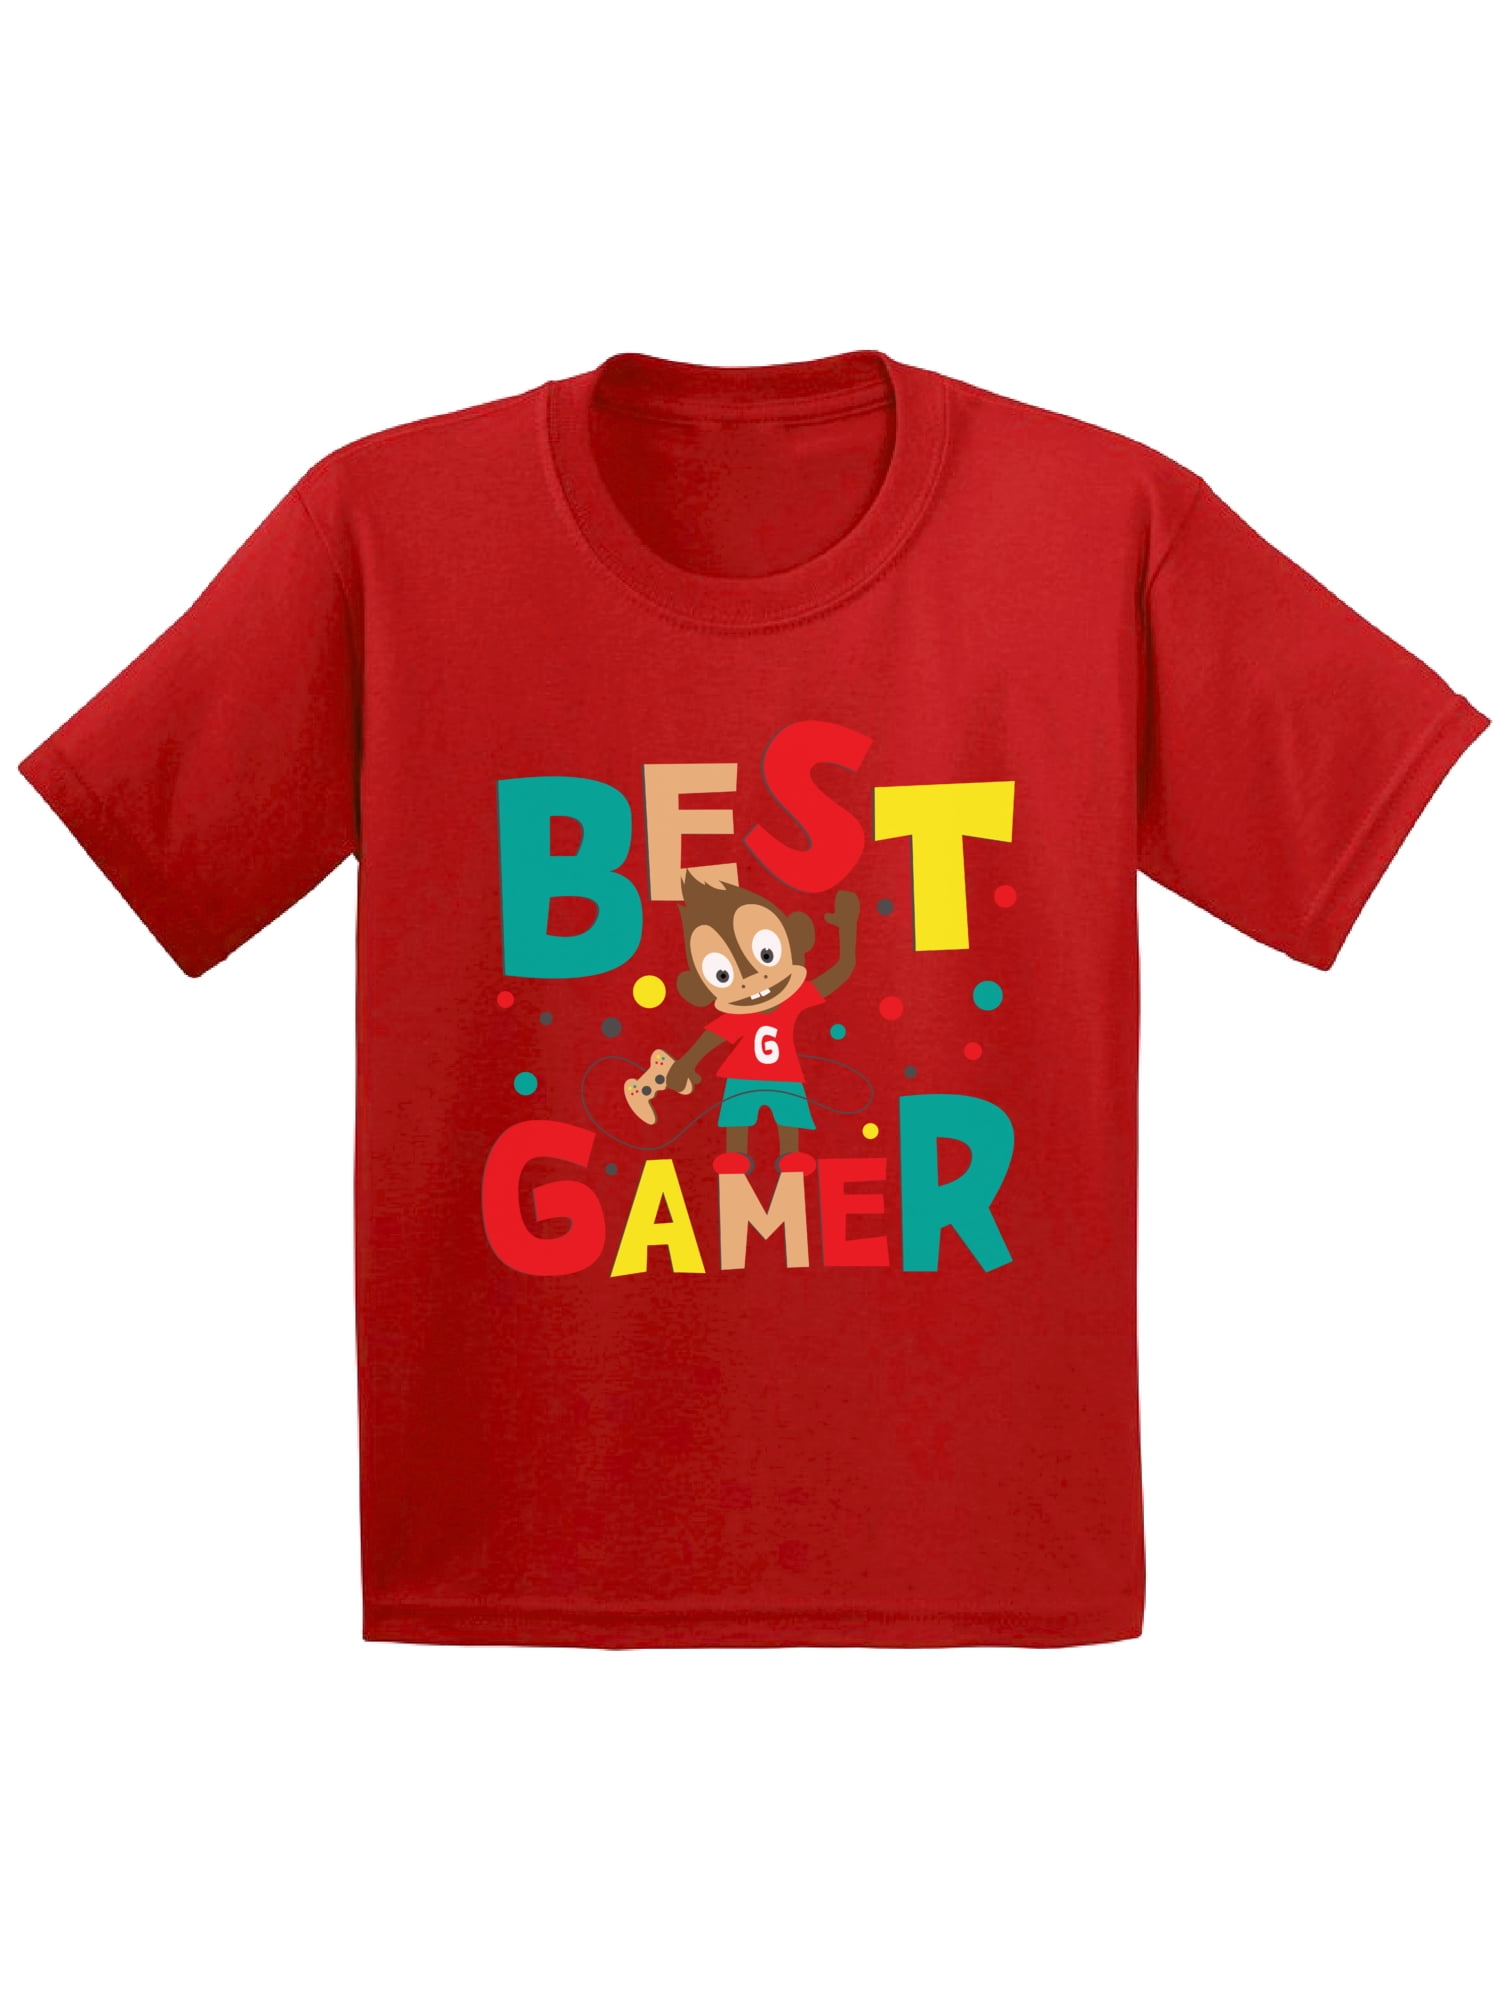 Roblox Characters Kids T-Shirt Girls Boys Gamer Gaming Tee Top